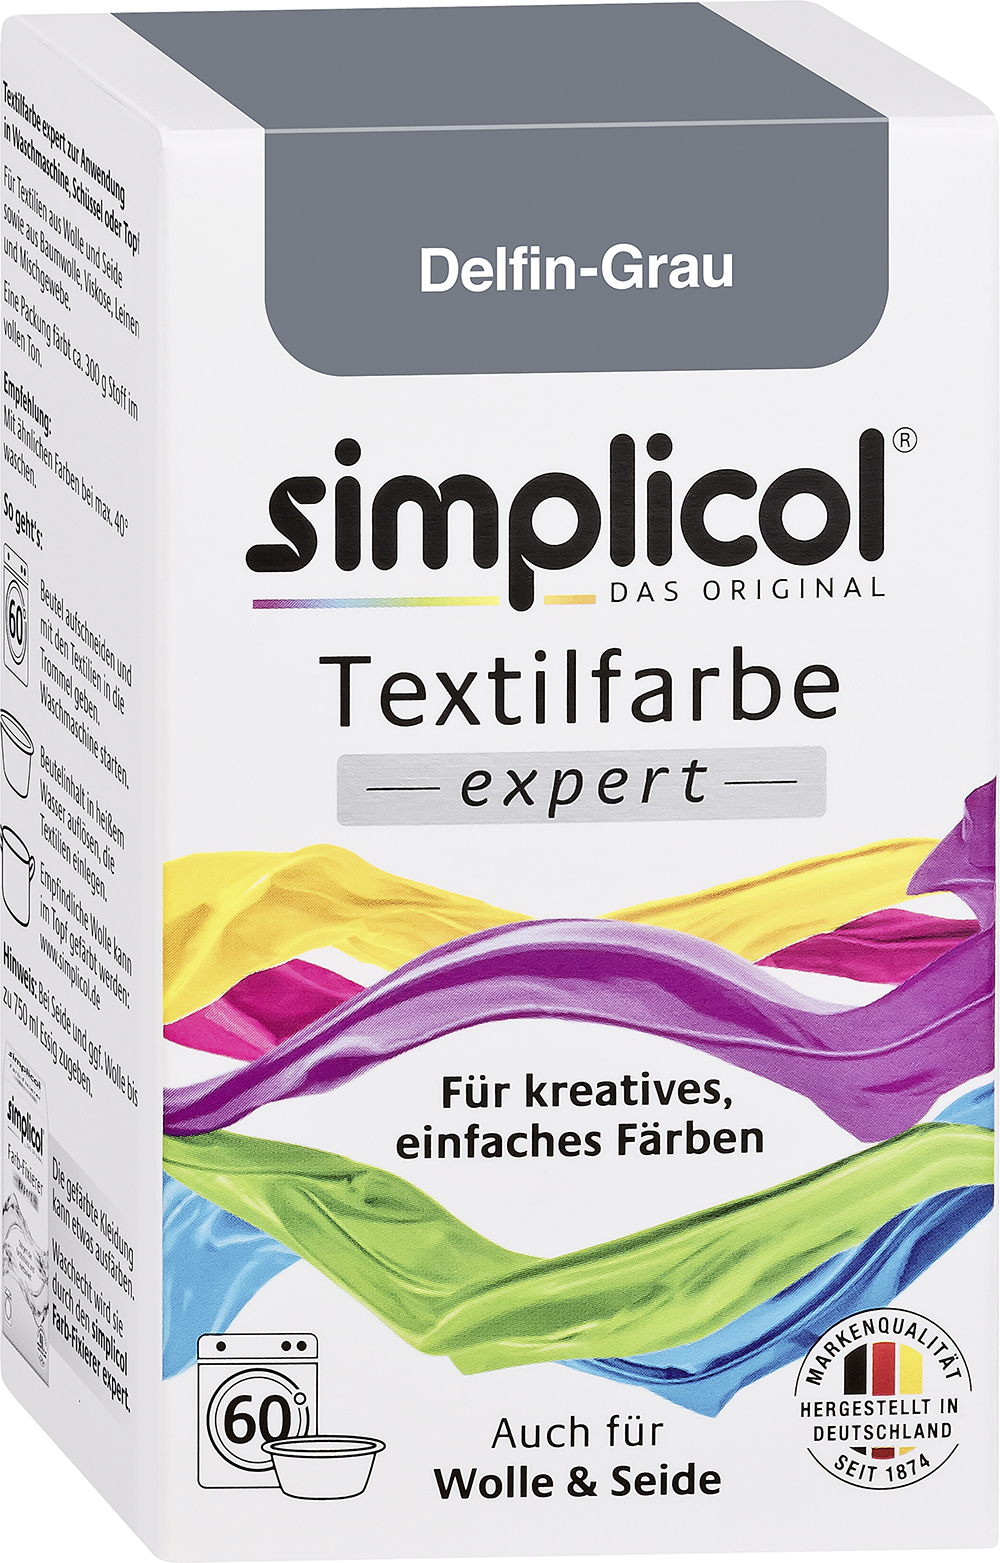 SIMPLICOL Textilfarbe Expert 150g delfingrau